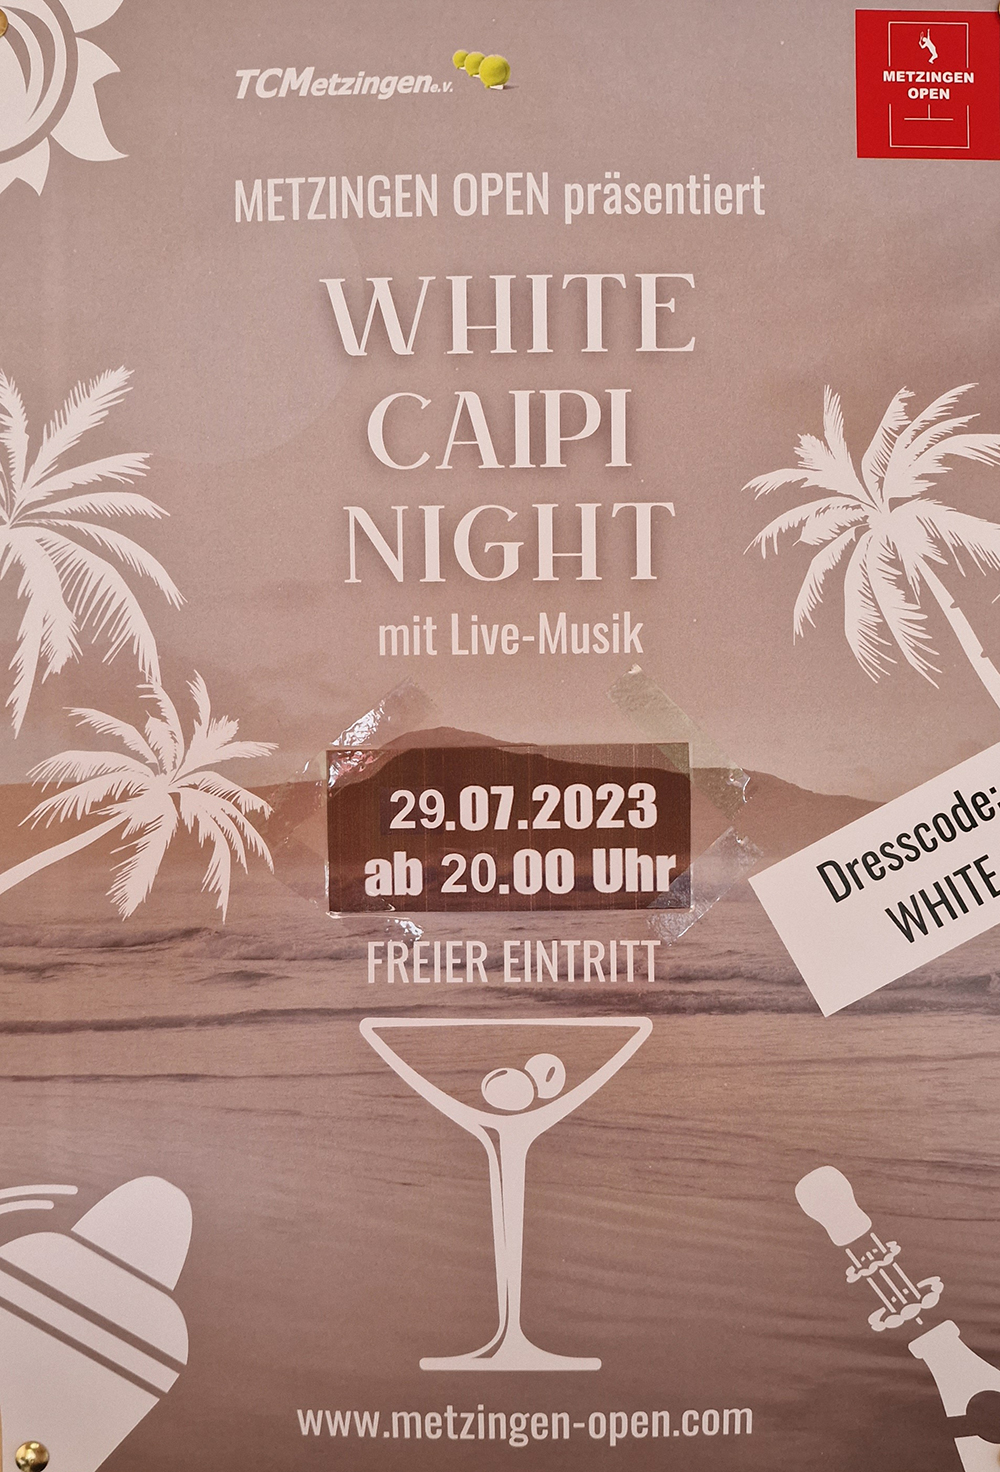 White Caipi Night new o